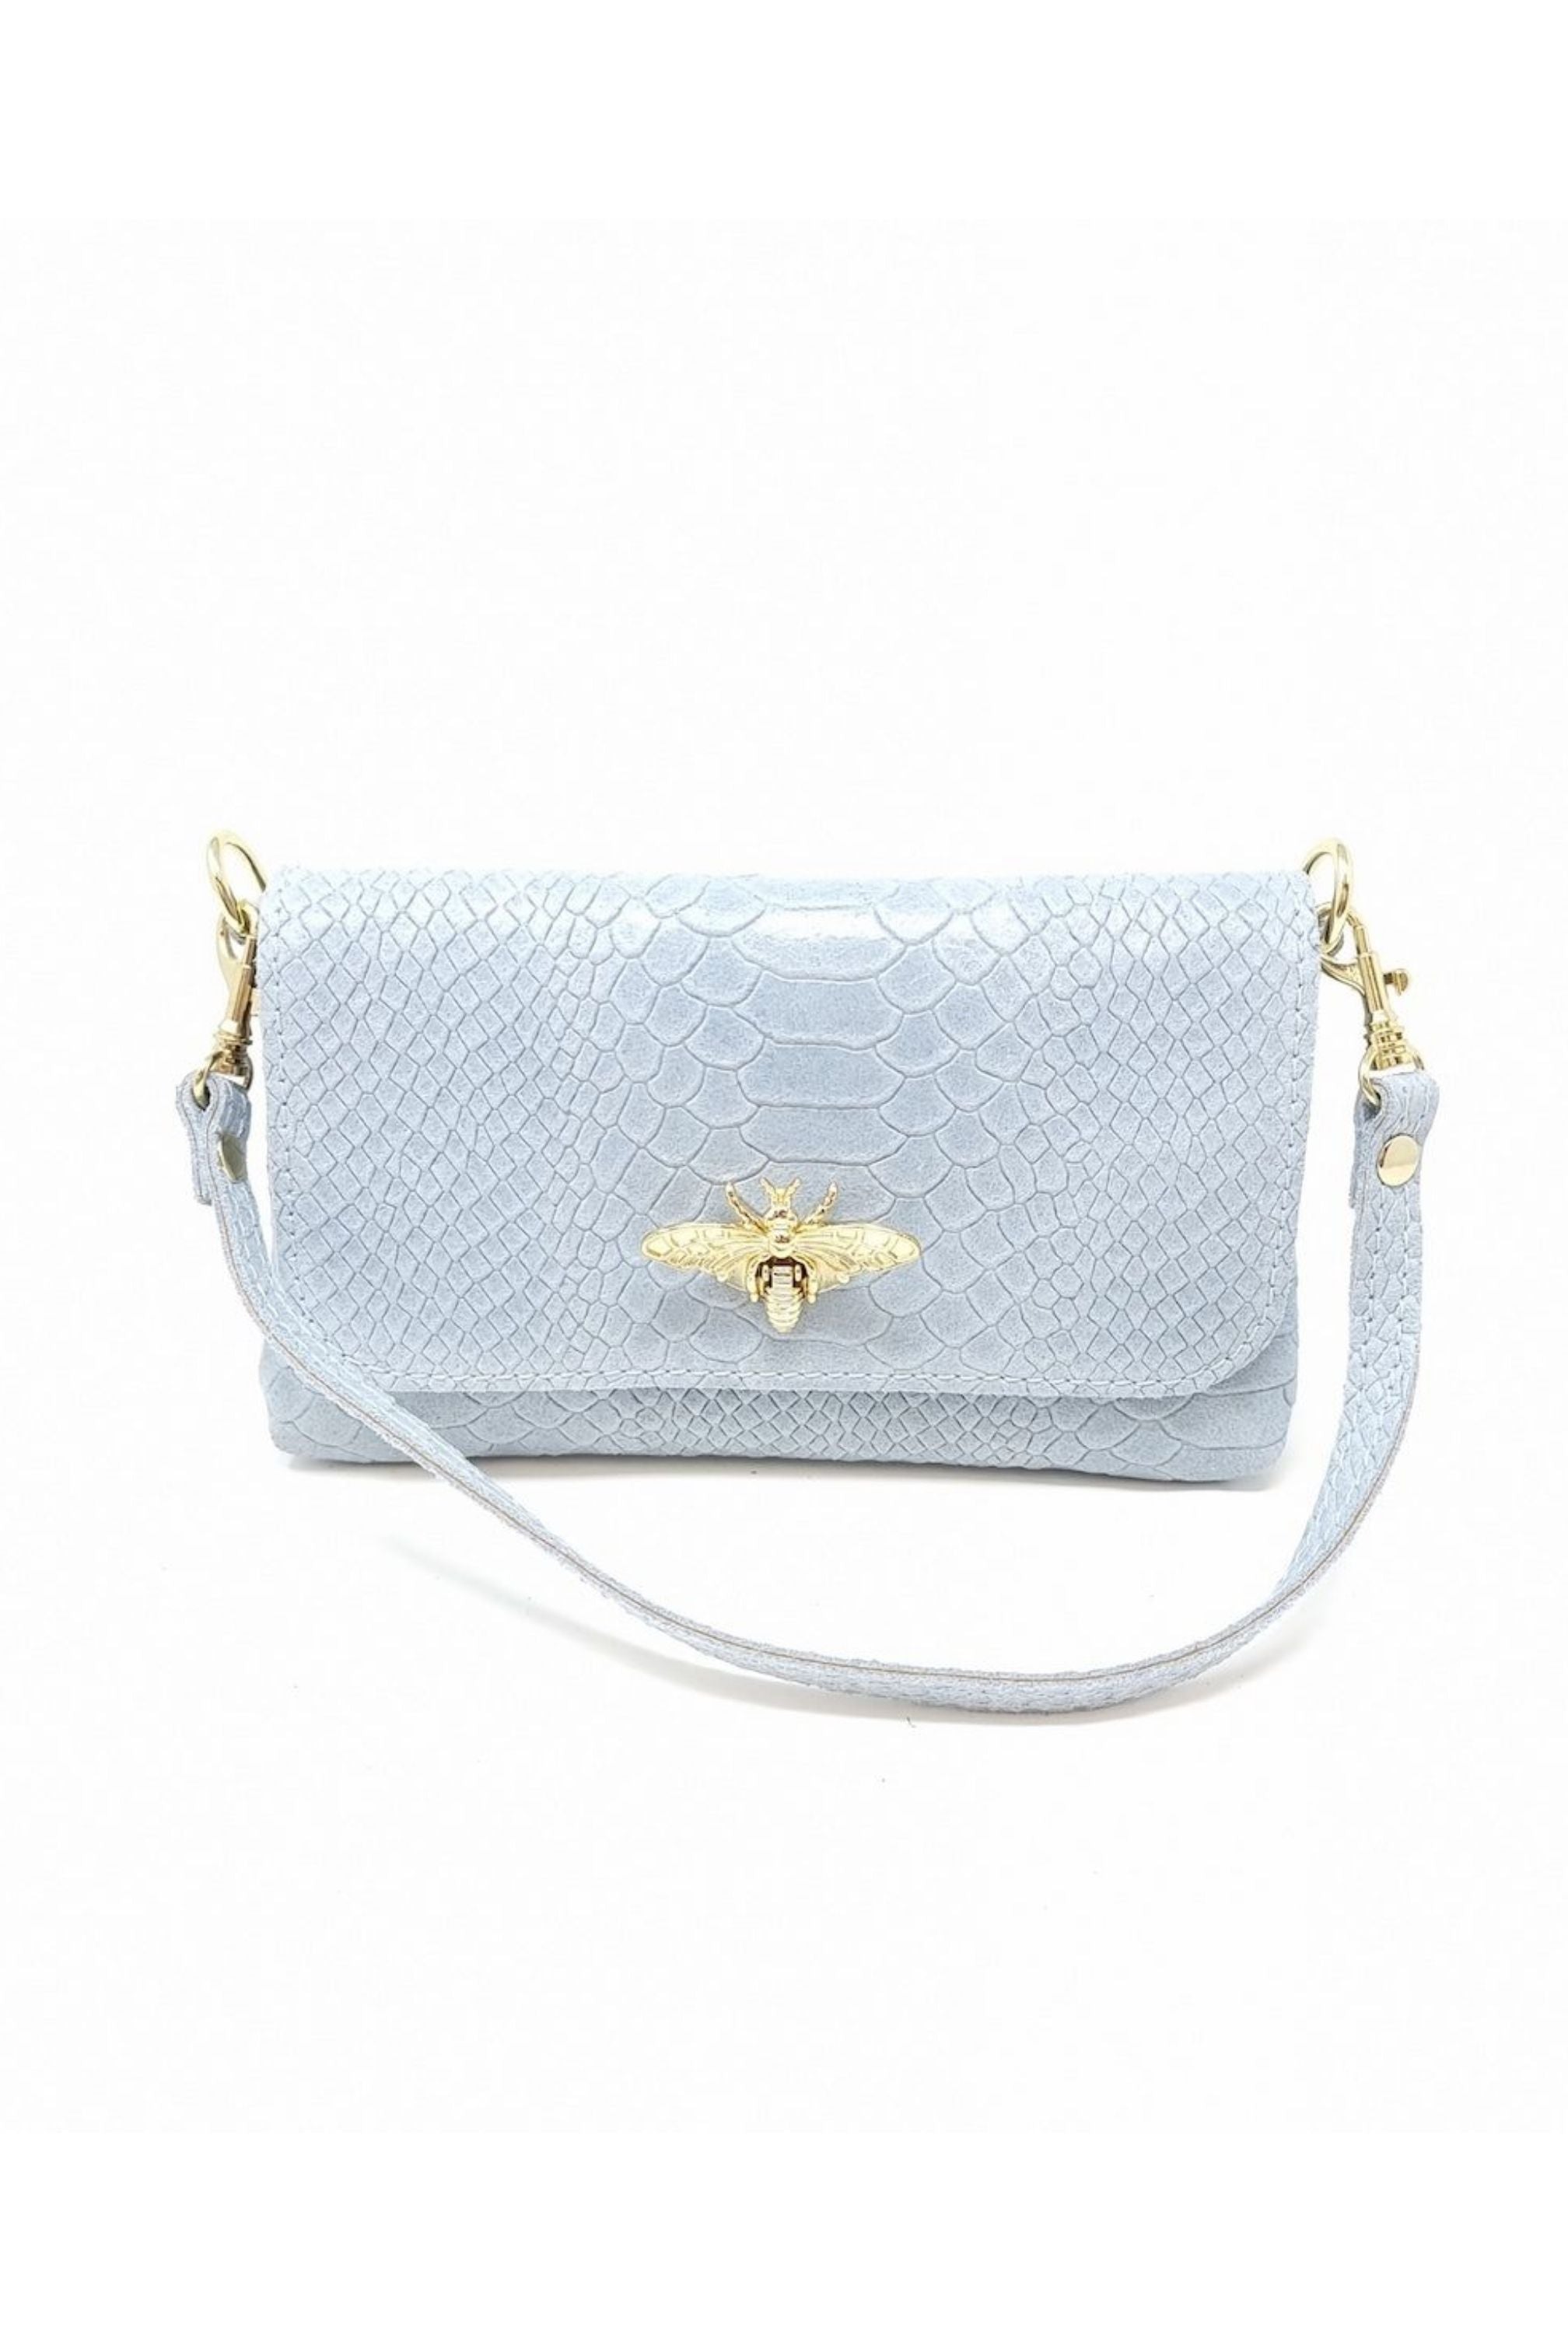 Baby blue handbag with bee embellishment